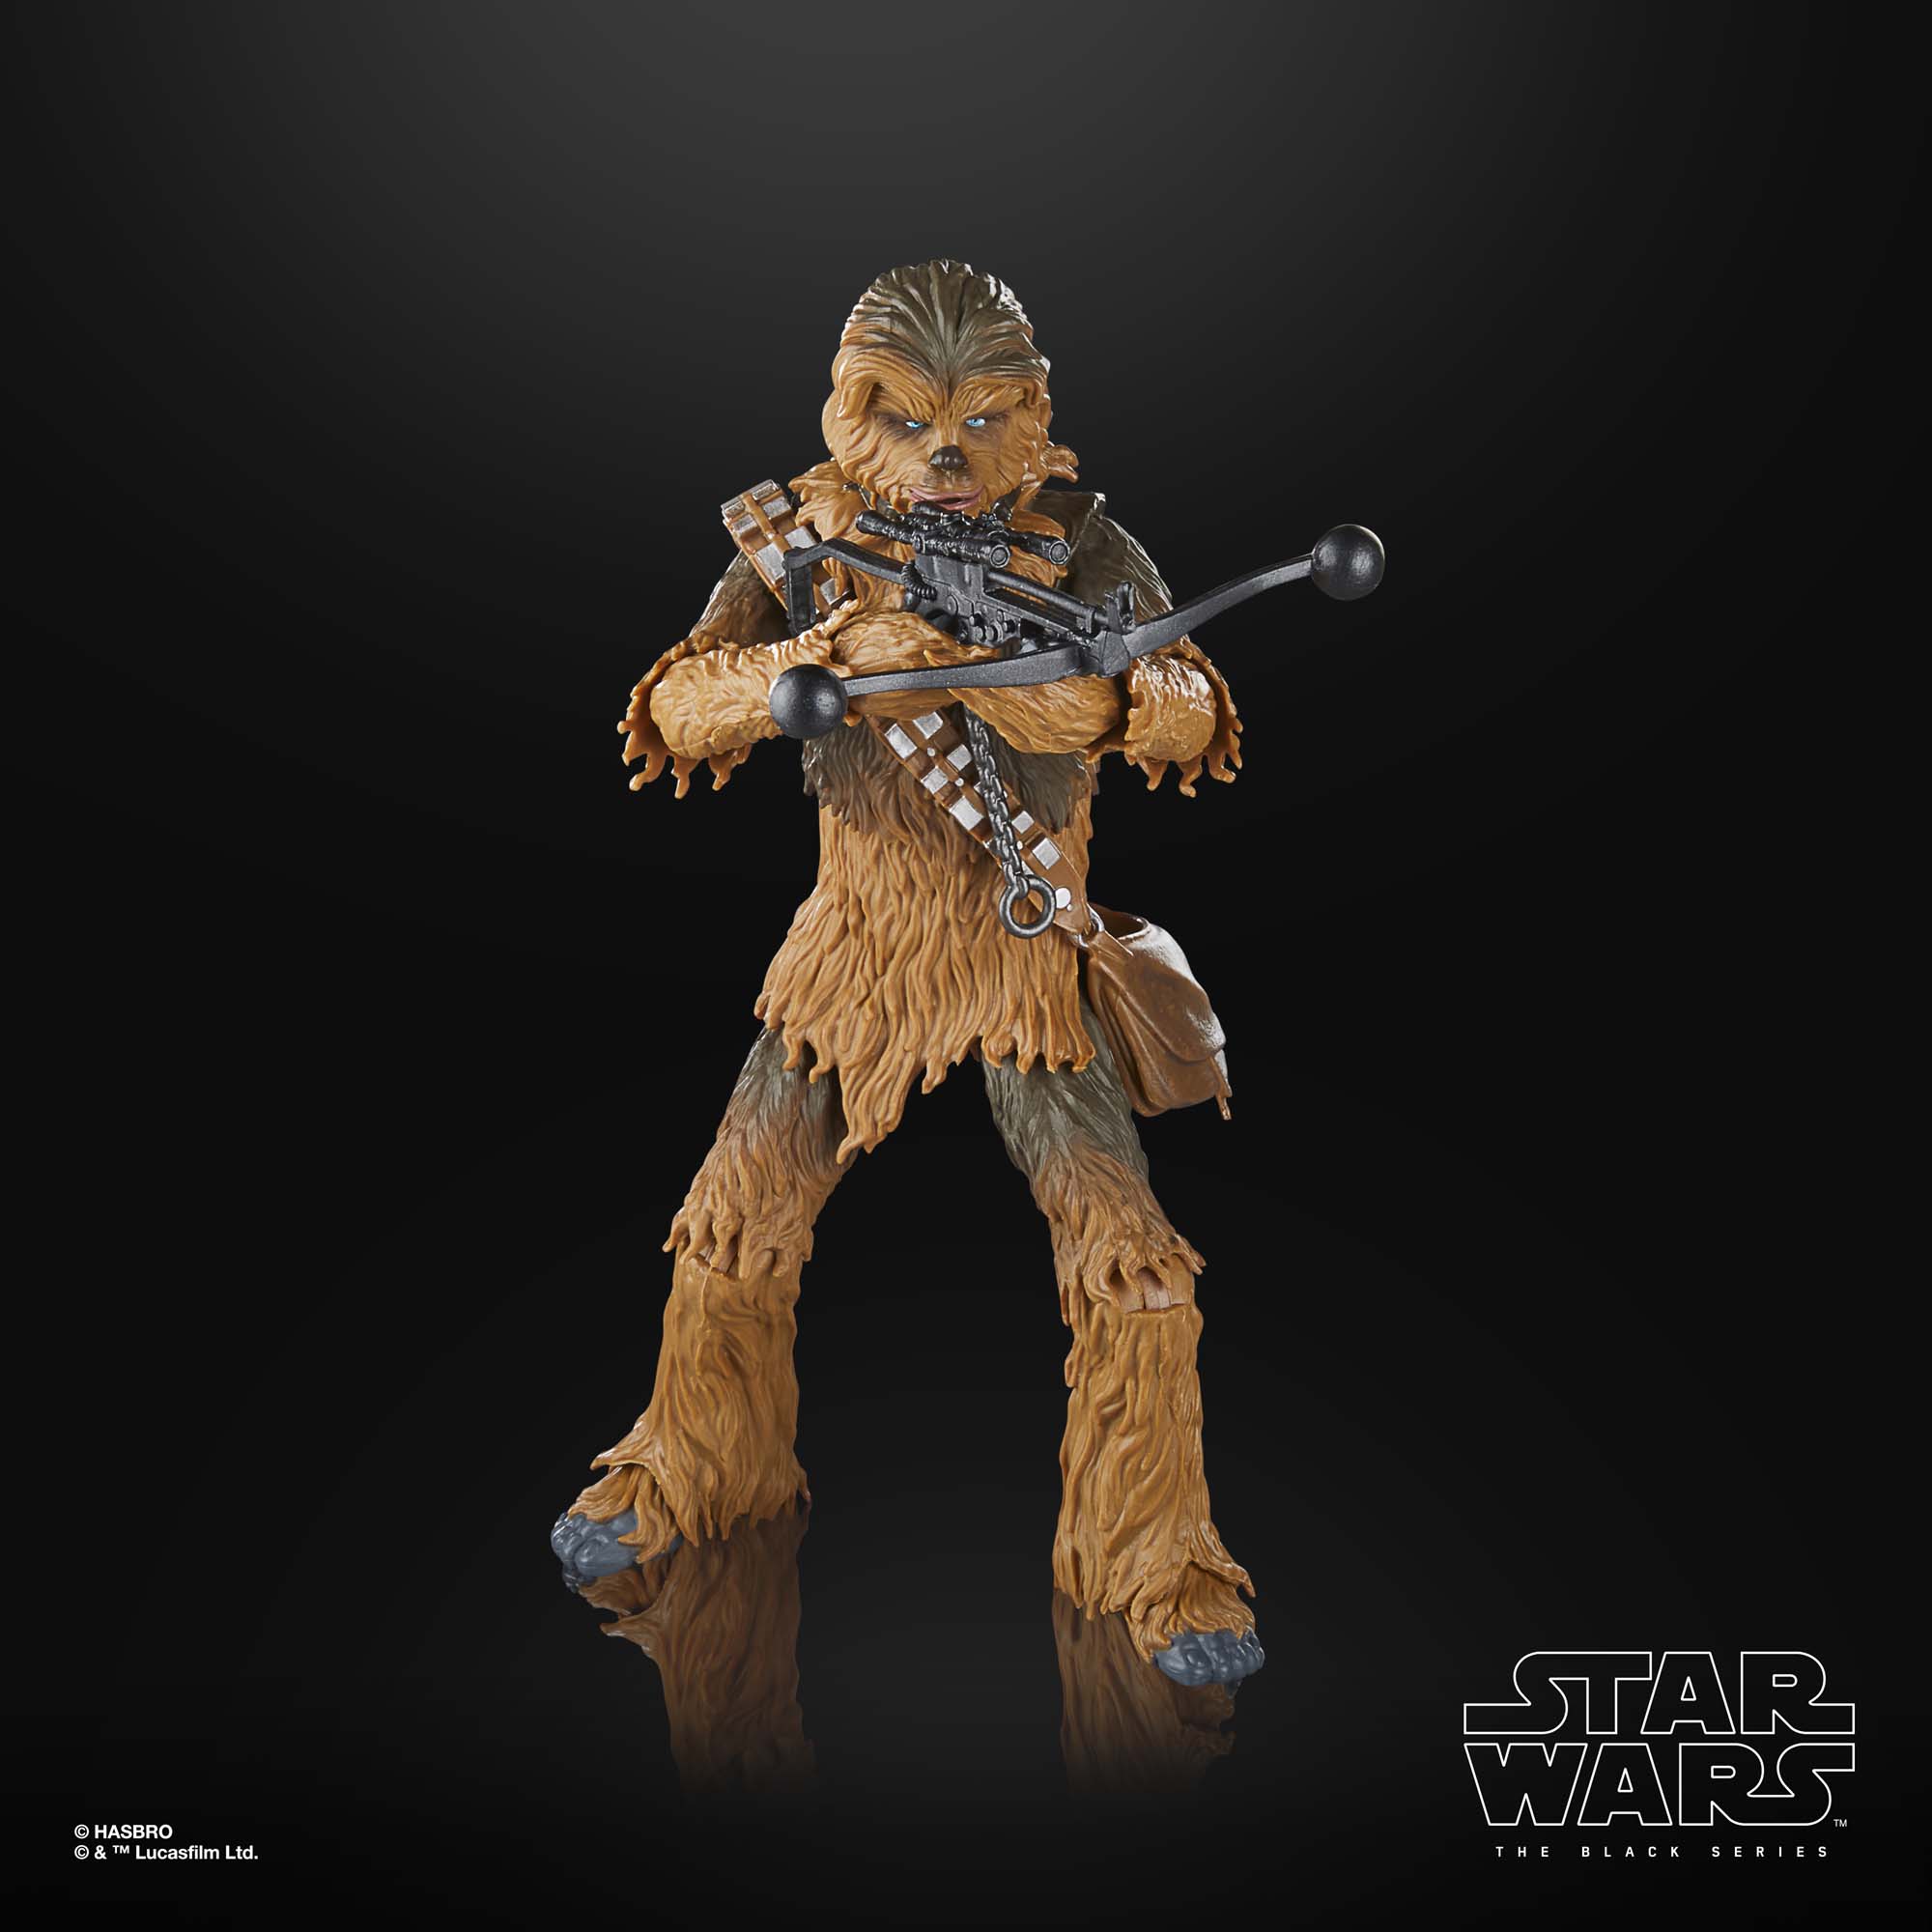 Star Wars The Black Series Chewbacca Star Wars Action-Figur (15 cm) F71125X0 5010996171061